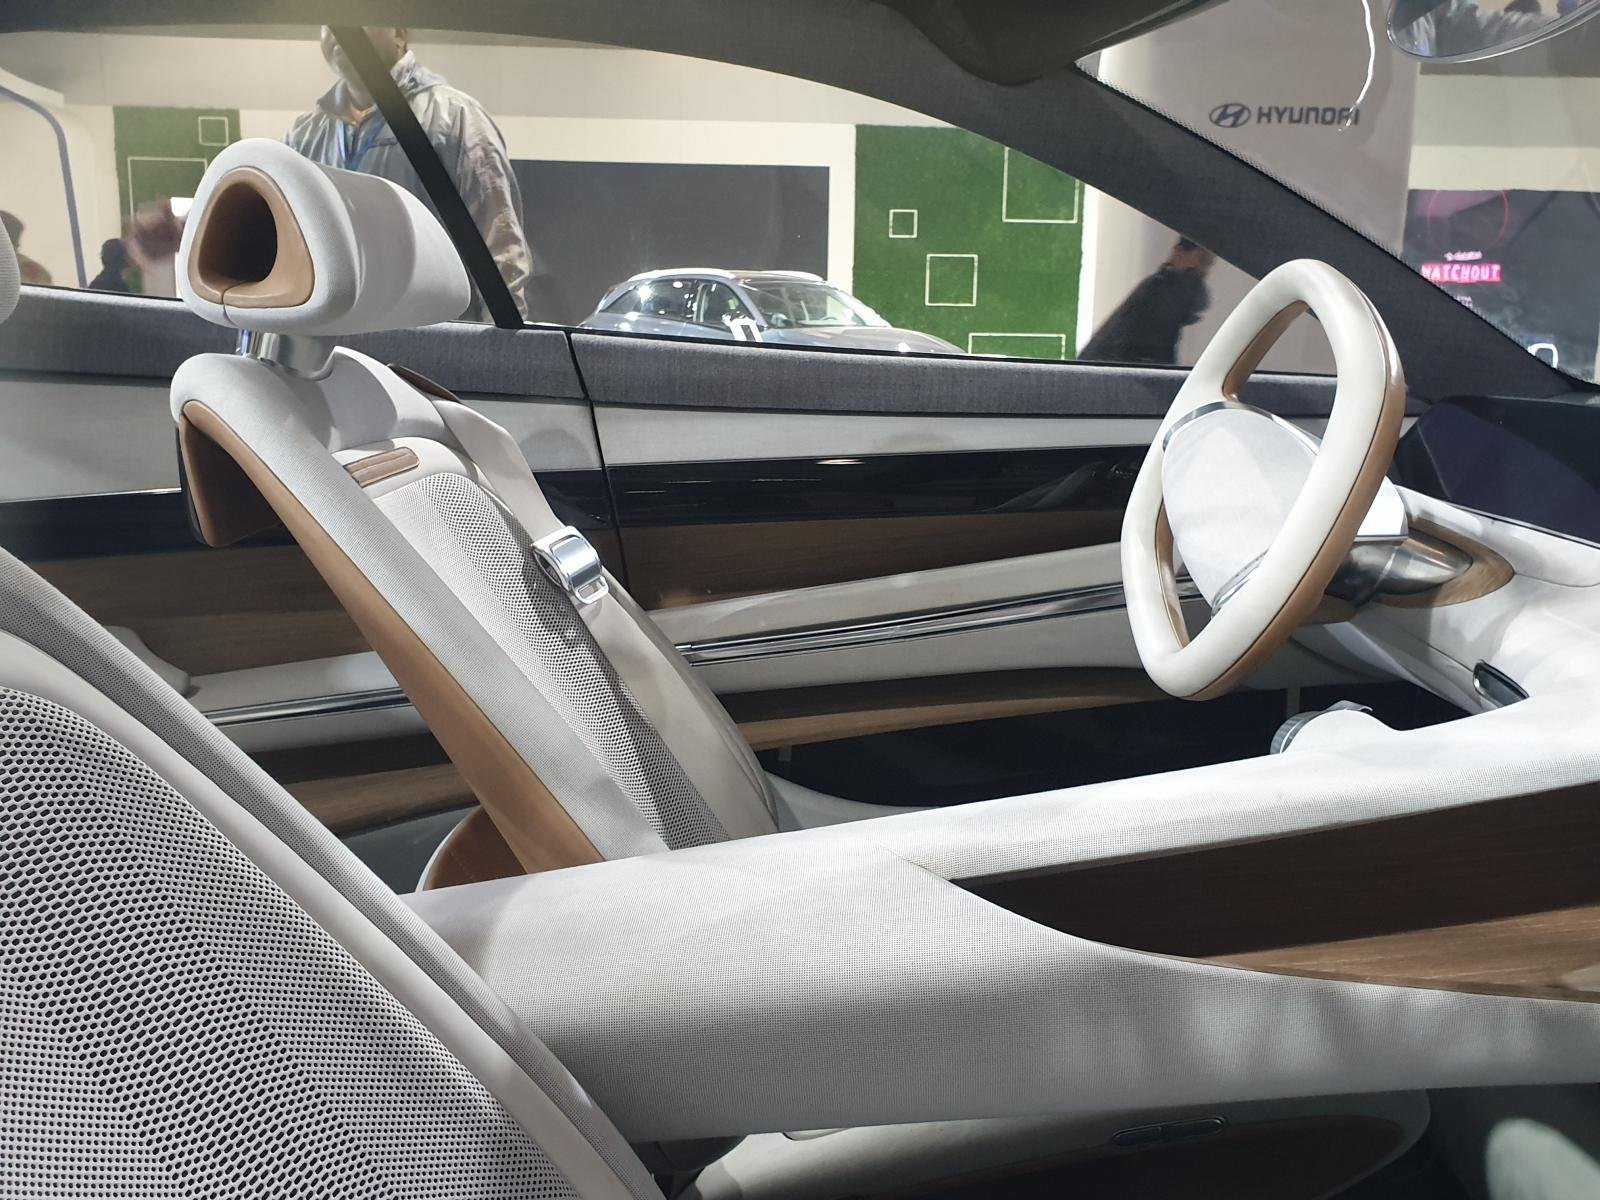 Auto Expo 2020 - Hyundai Le Fil Rouge interior